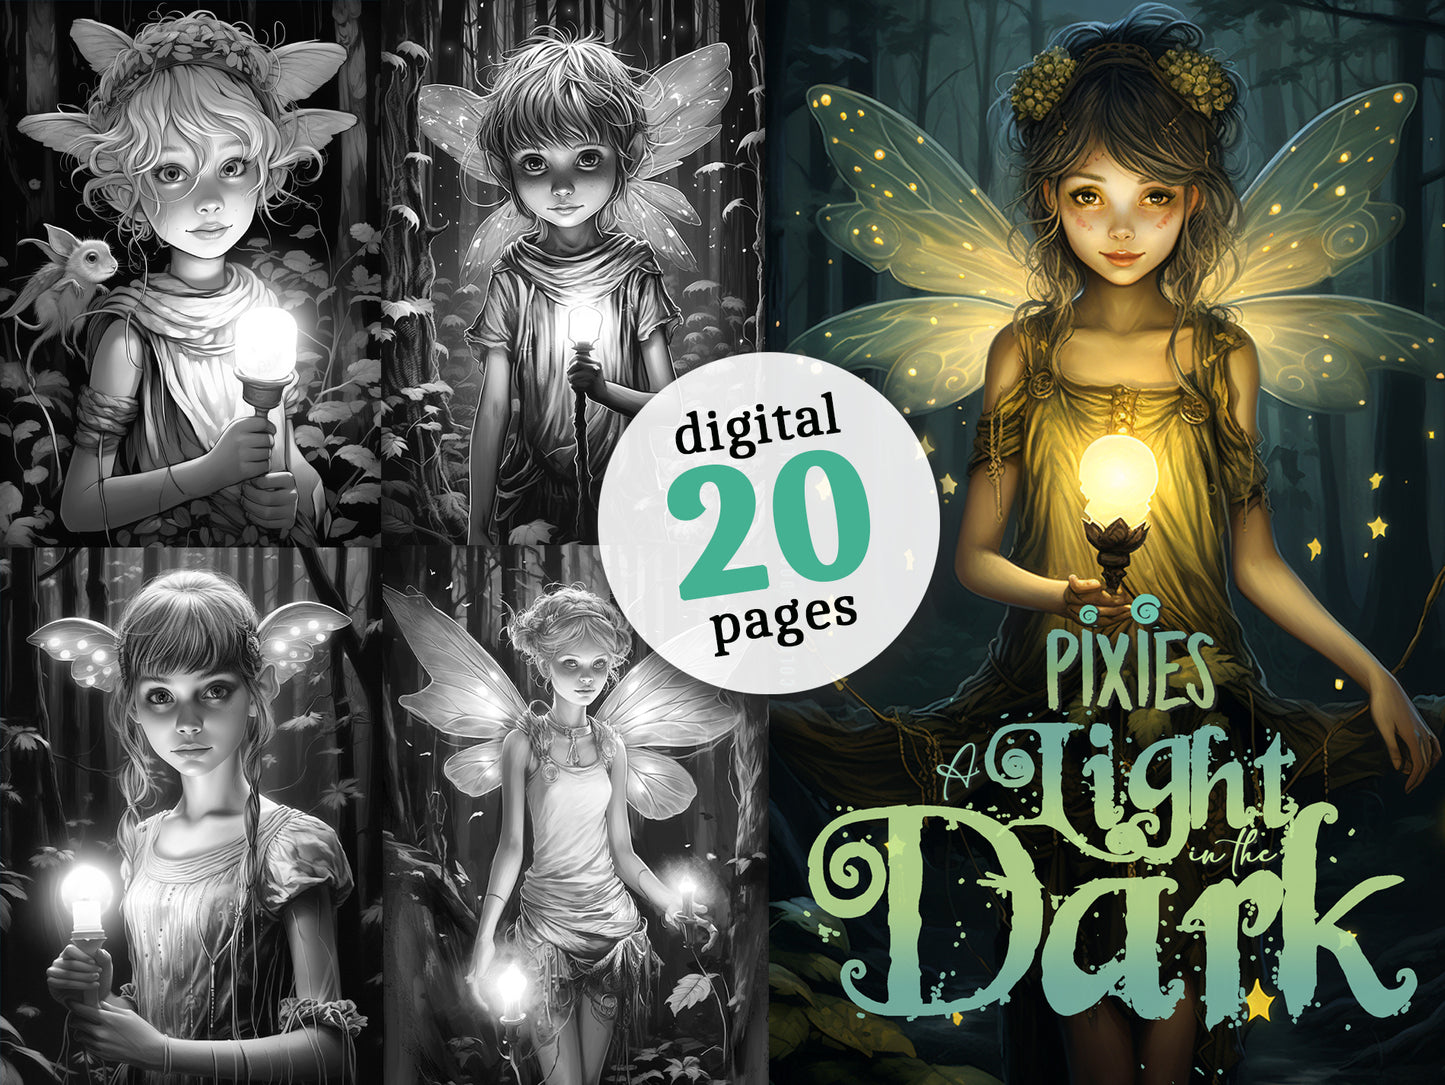 Pixies in the Dark Coloring Book (Digital)